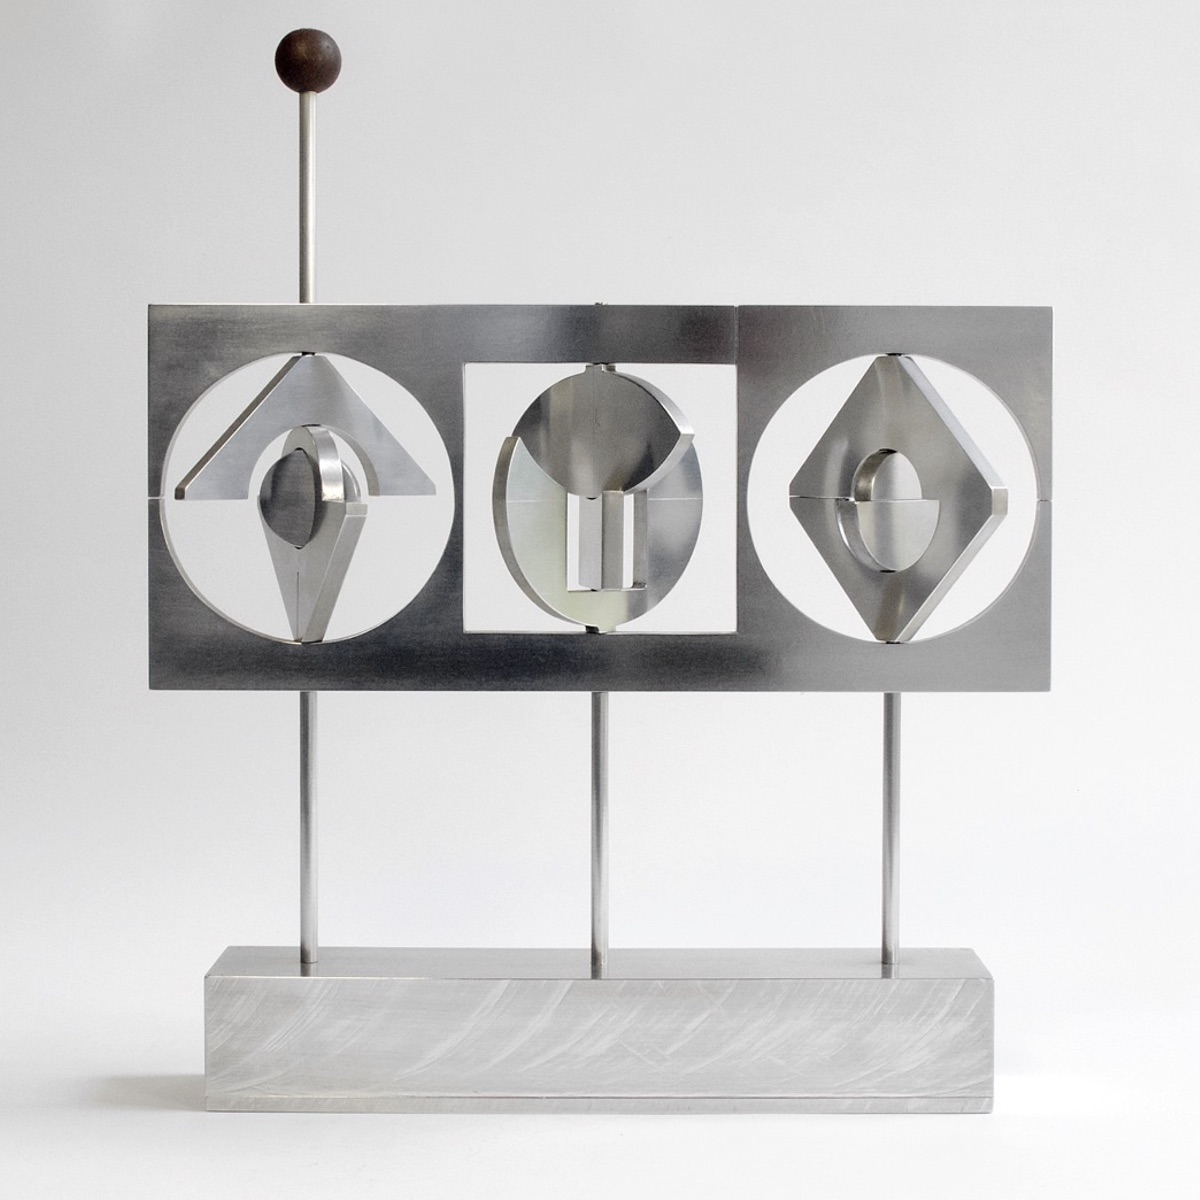 Drehfigur – Rechteck mit 3 Ausschnitten», 1966 (Aluminium, Bronze, 48,5 x 40,5 x 6 cm, WG 66 – 277 M)